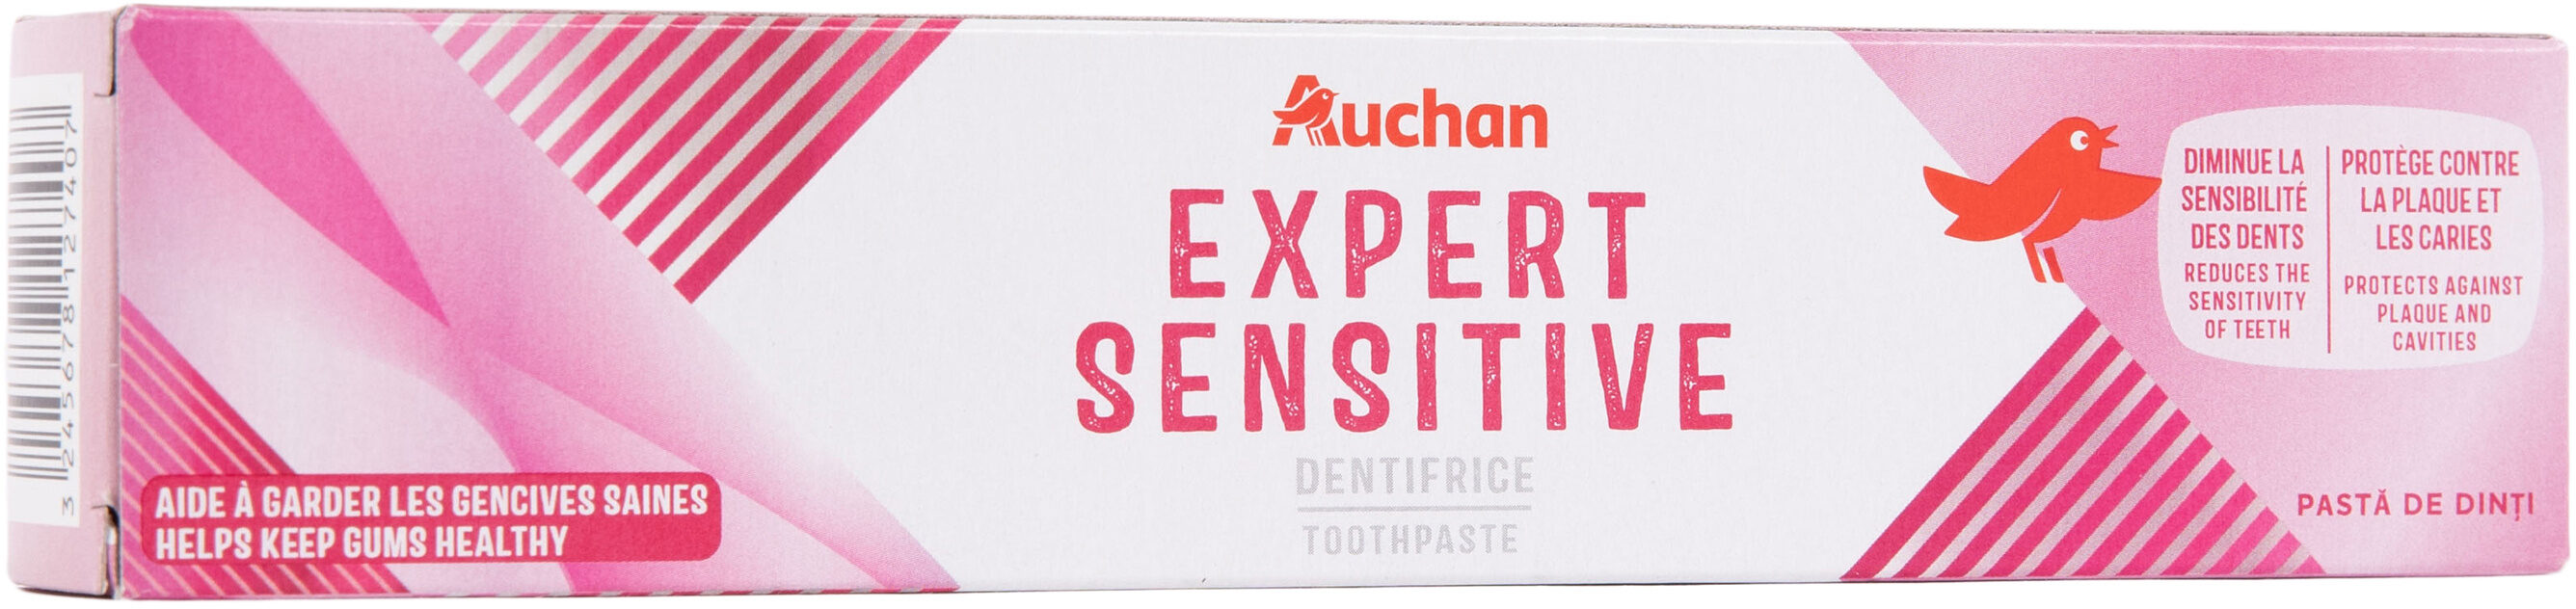 Dentifrice dents sensibles - Product - fr